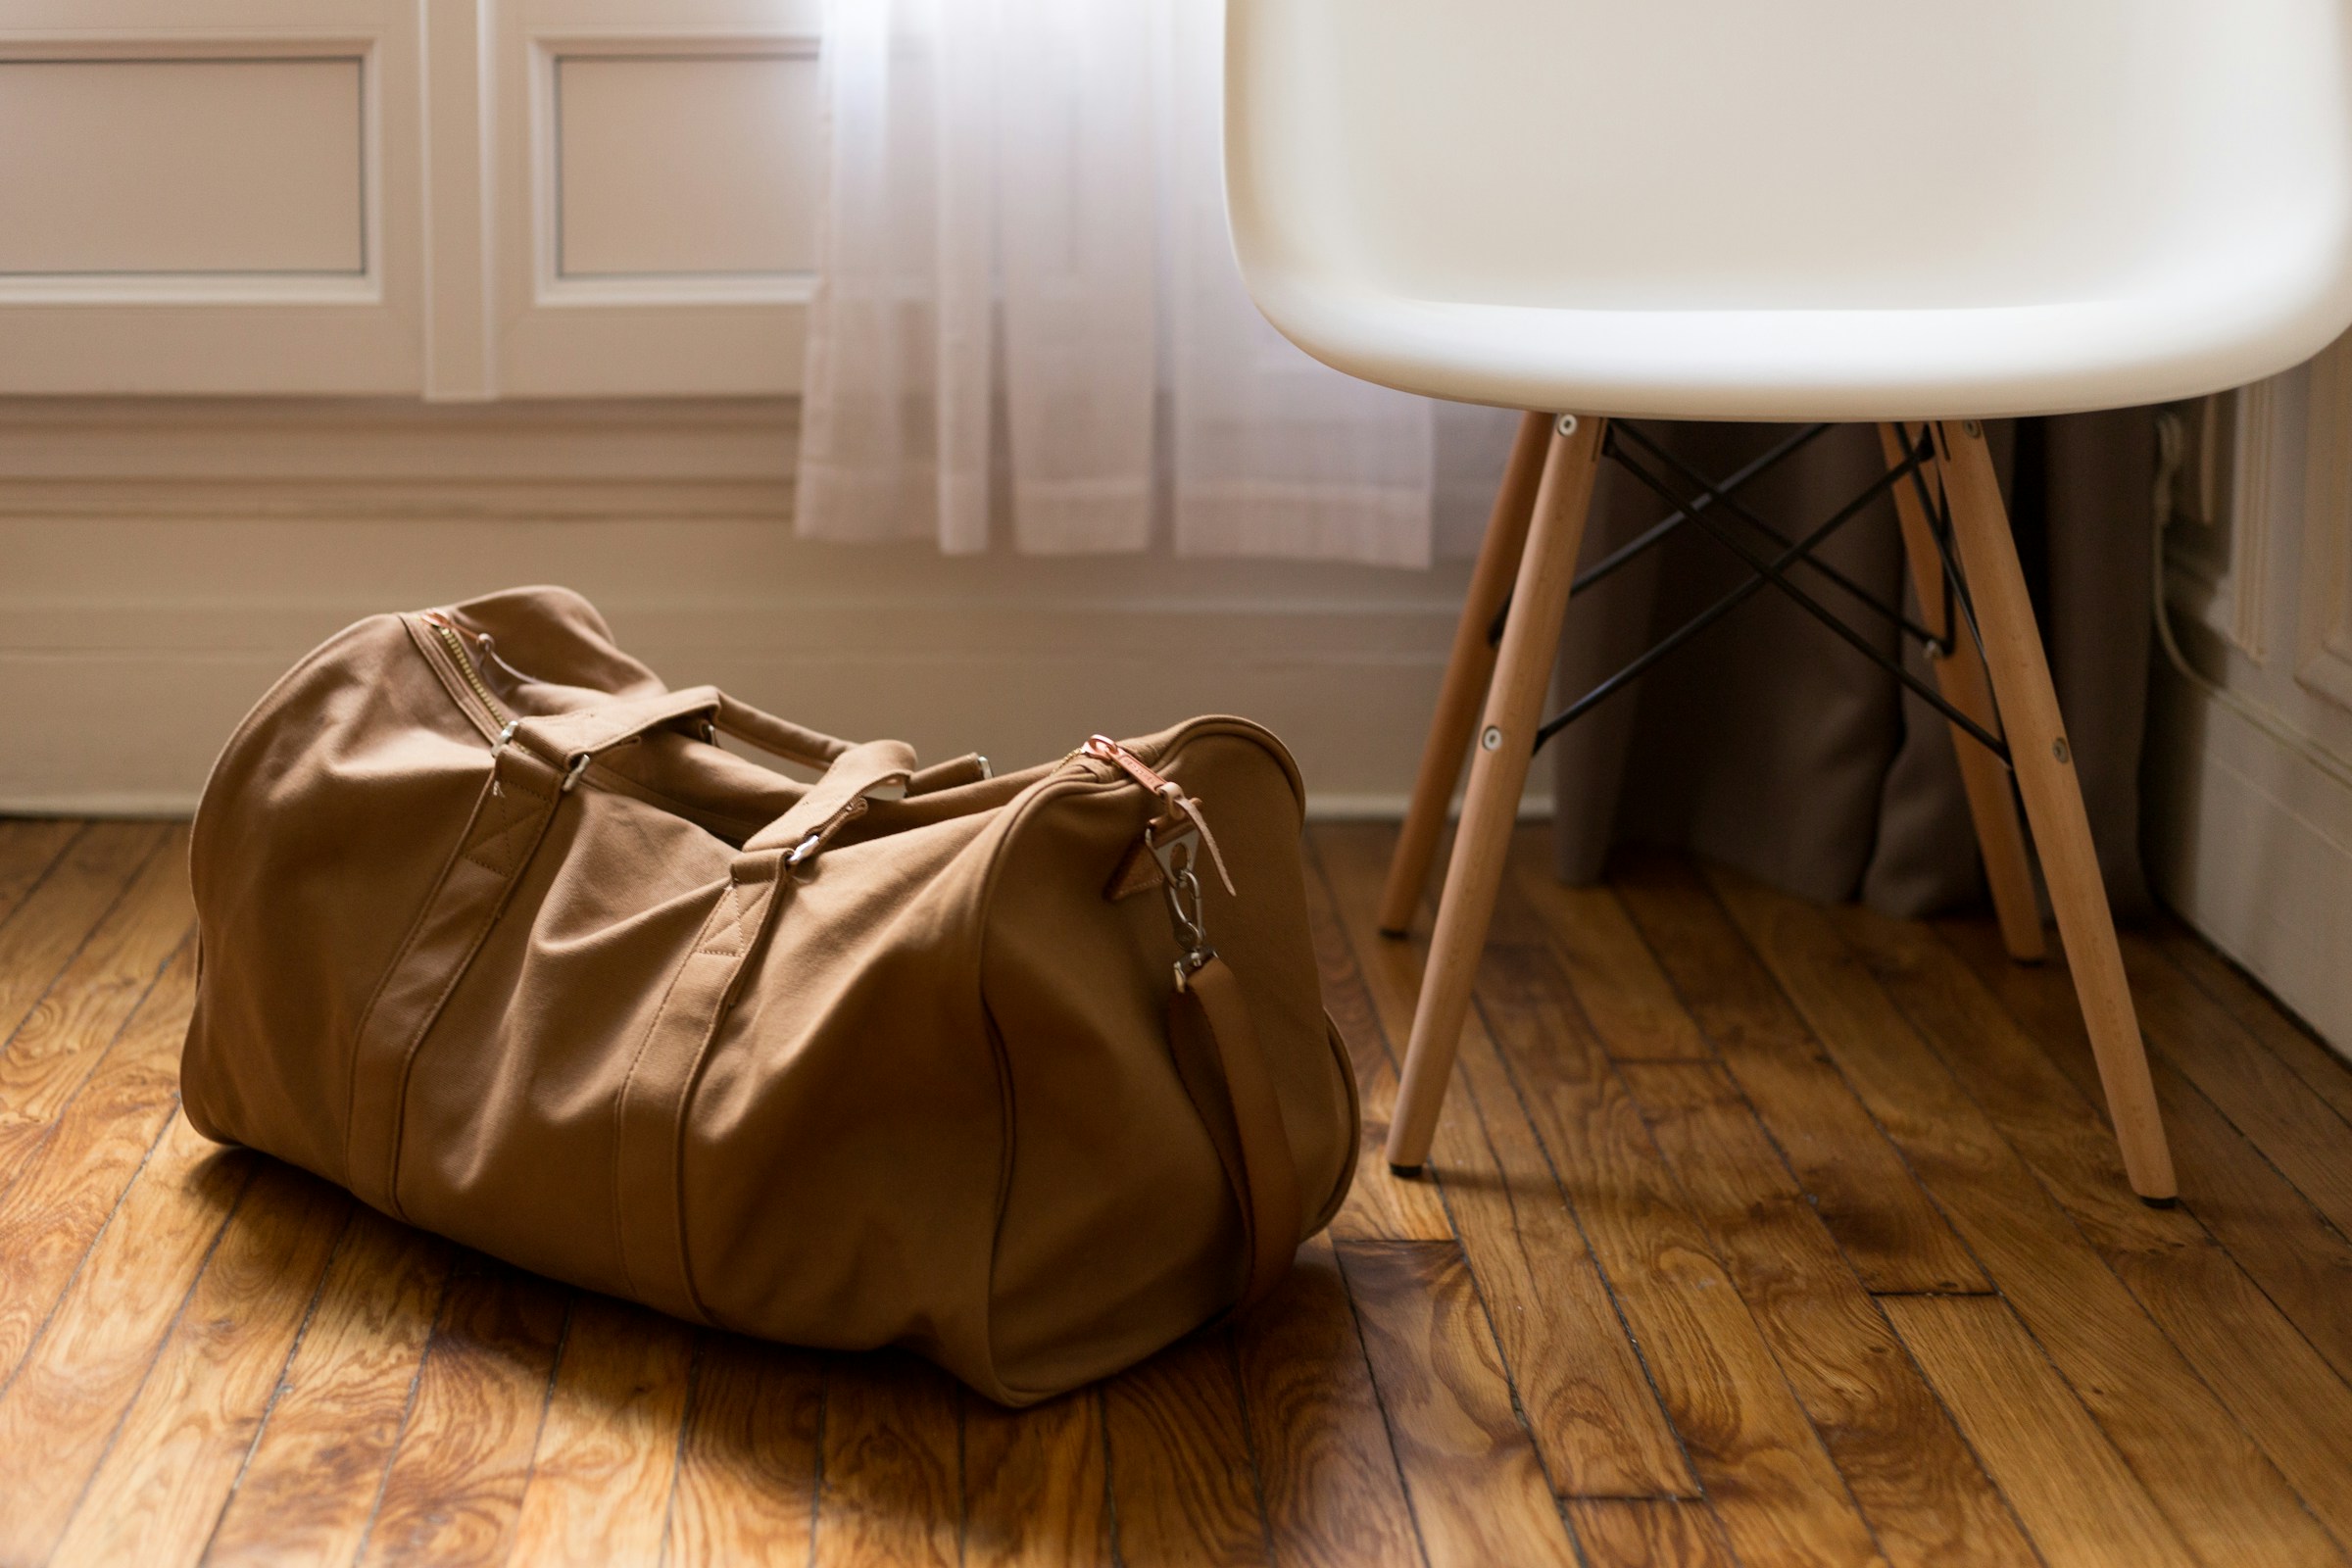 A brown duffel bag | Source: Unsplash